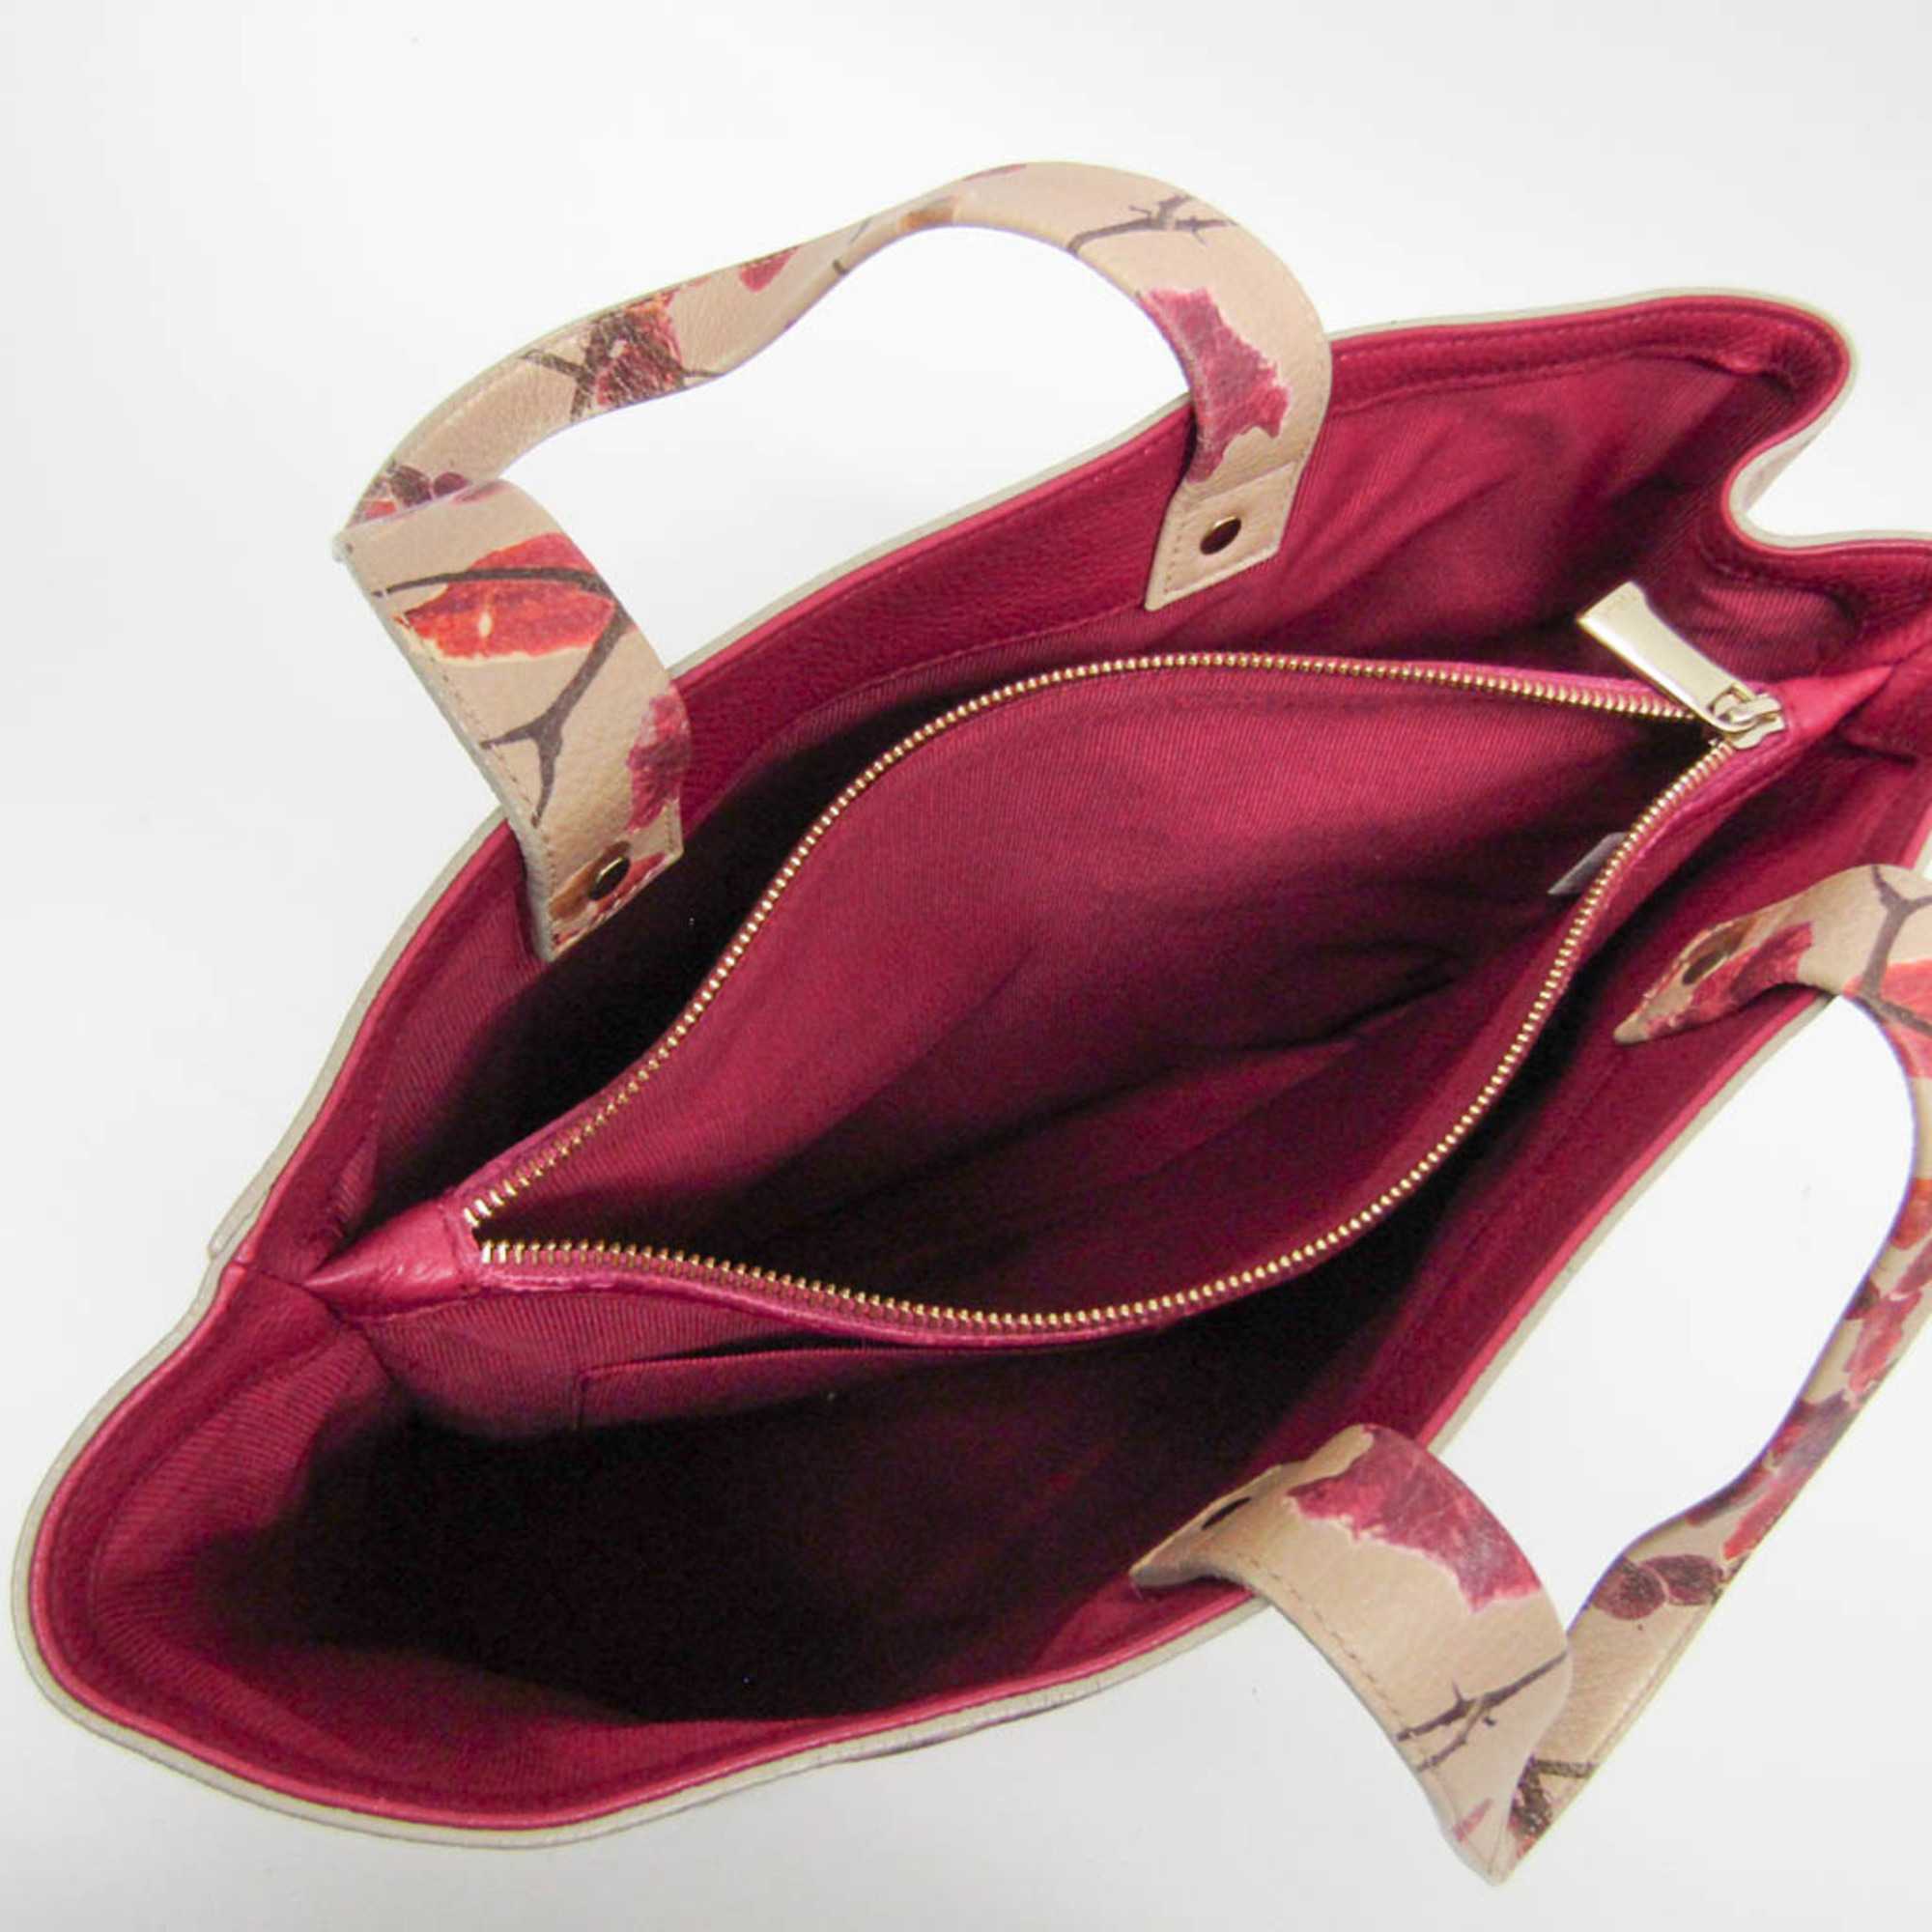 Furla Floral Women's Leather Tote Bag Beige,Multi-color